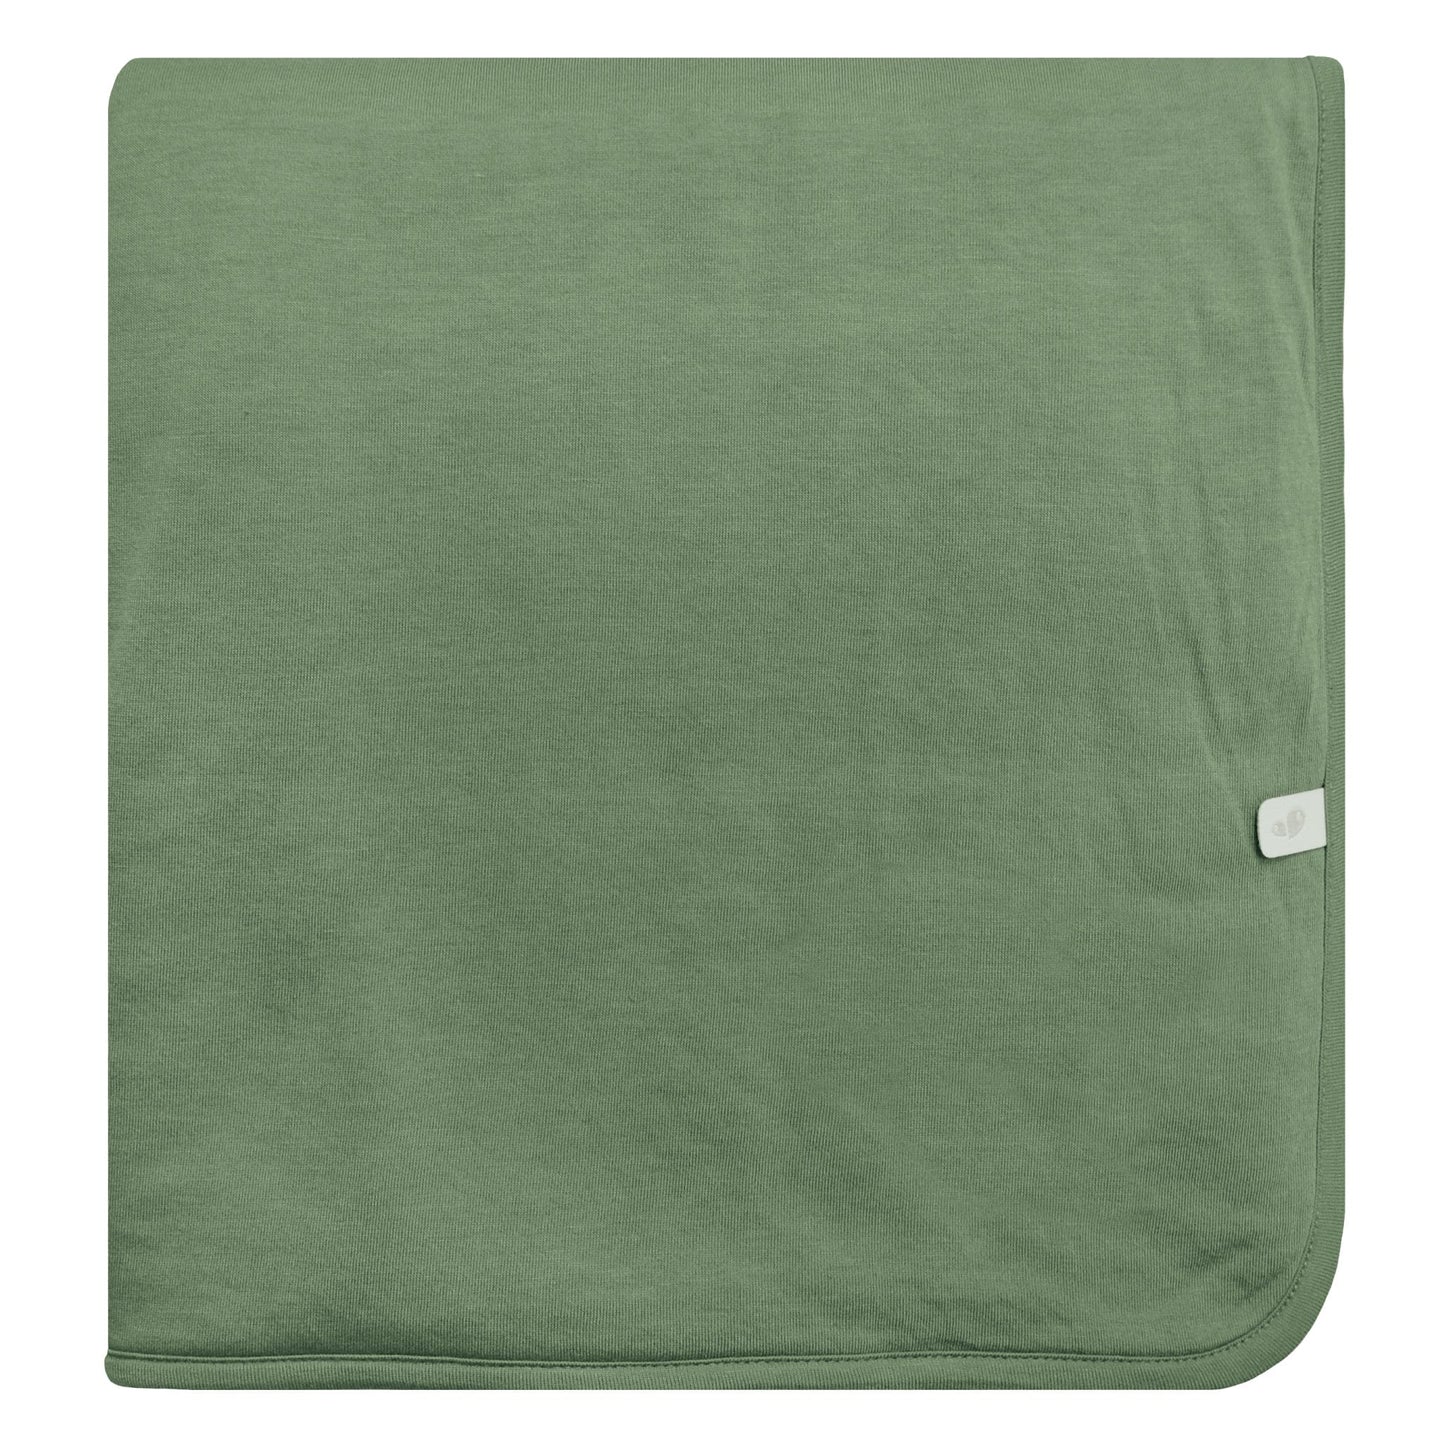 Bamboo blanket - Hunter green